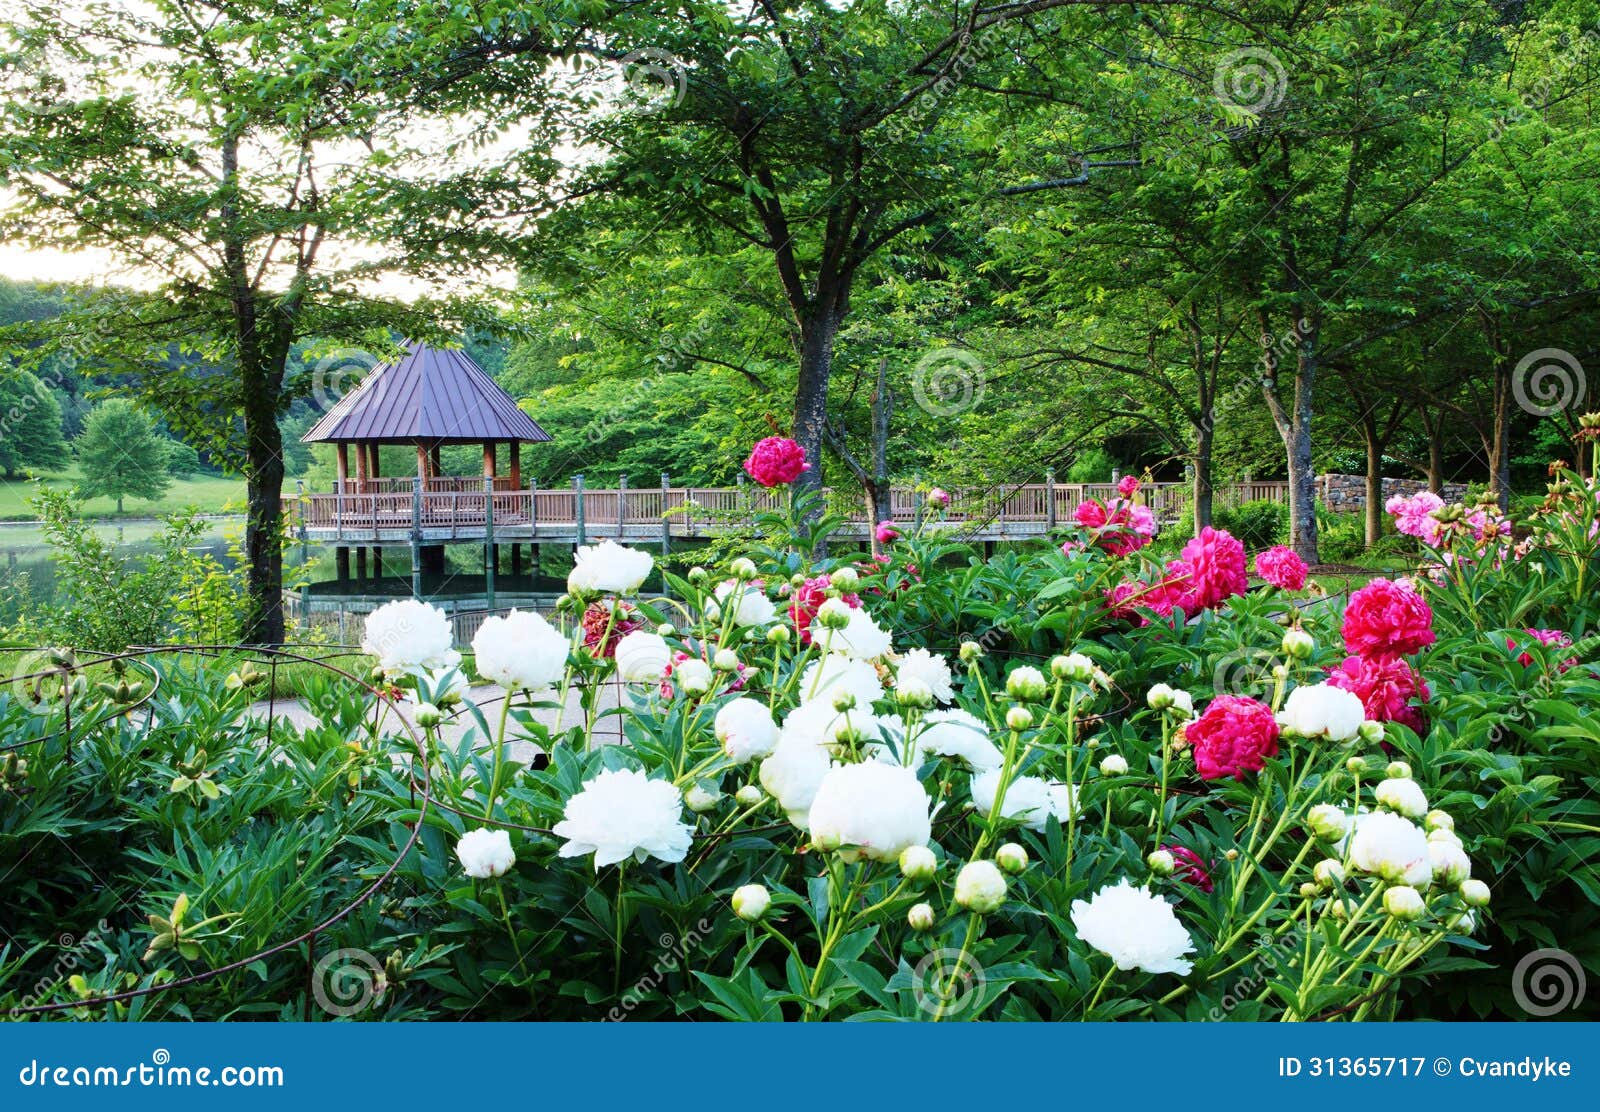 Meadowlark Botanical Gardens Virginia Stock Image Image Of Park